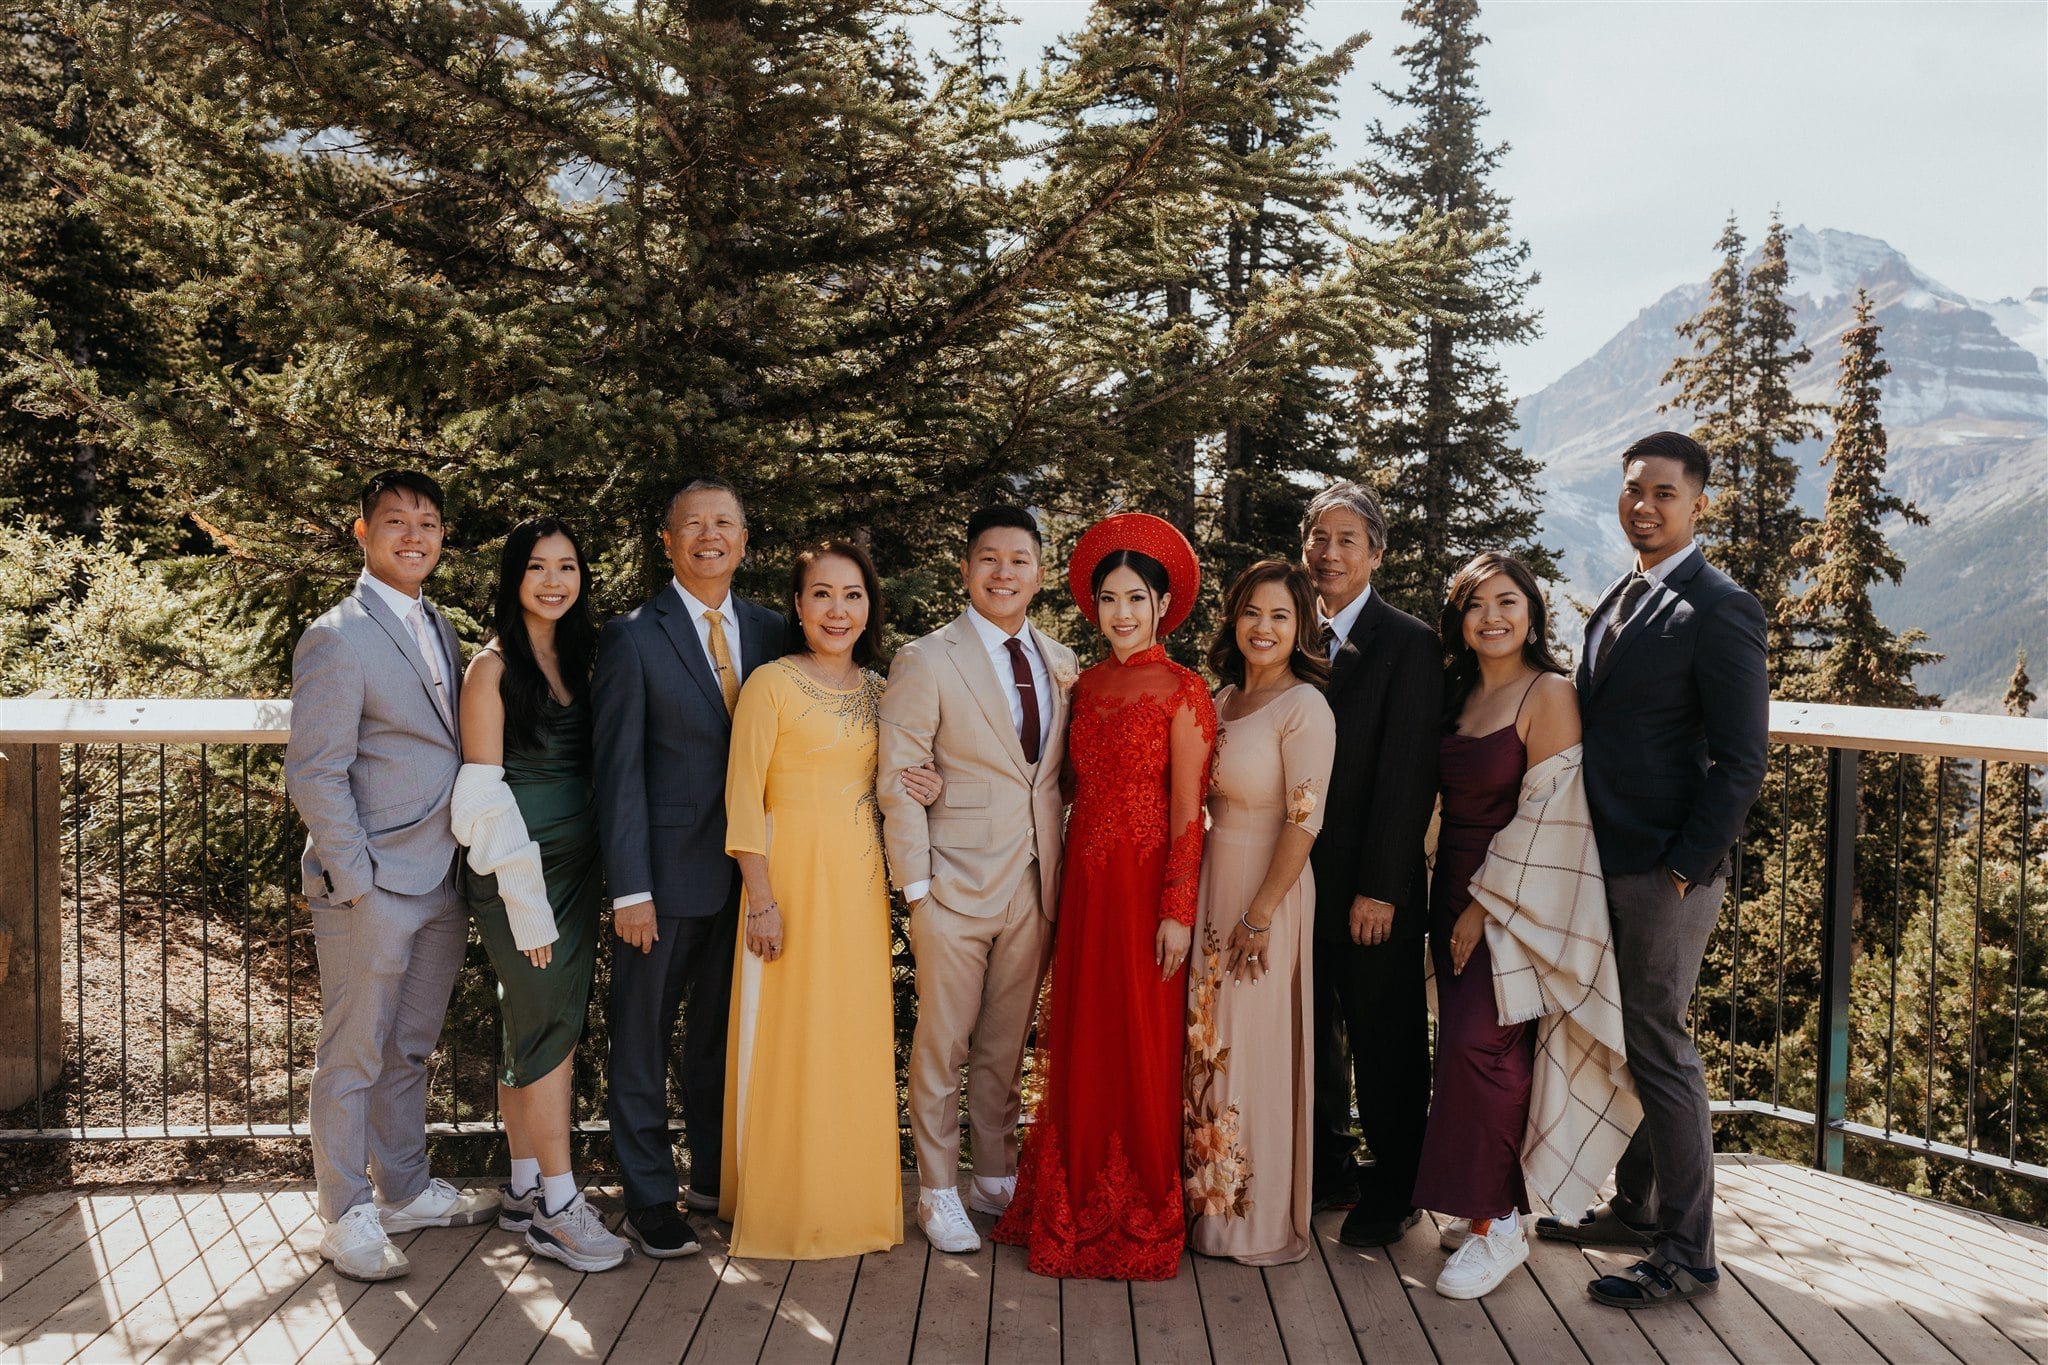 Family photos with Ao Dai at Banff National Park elopement